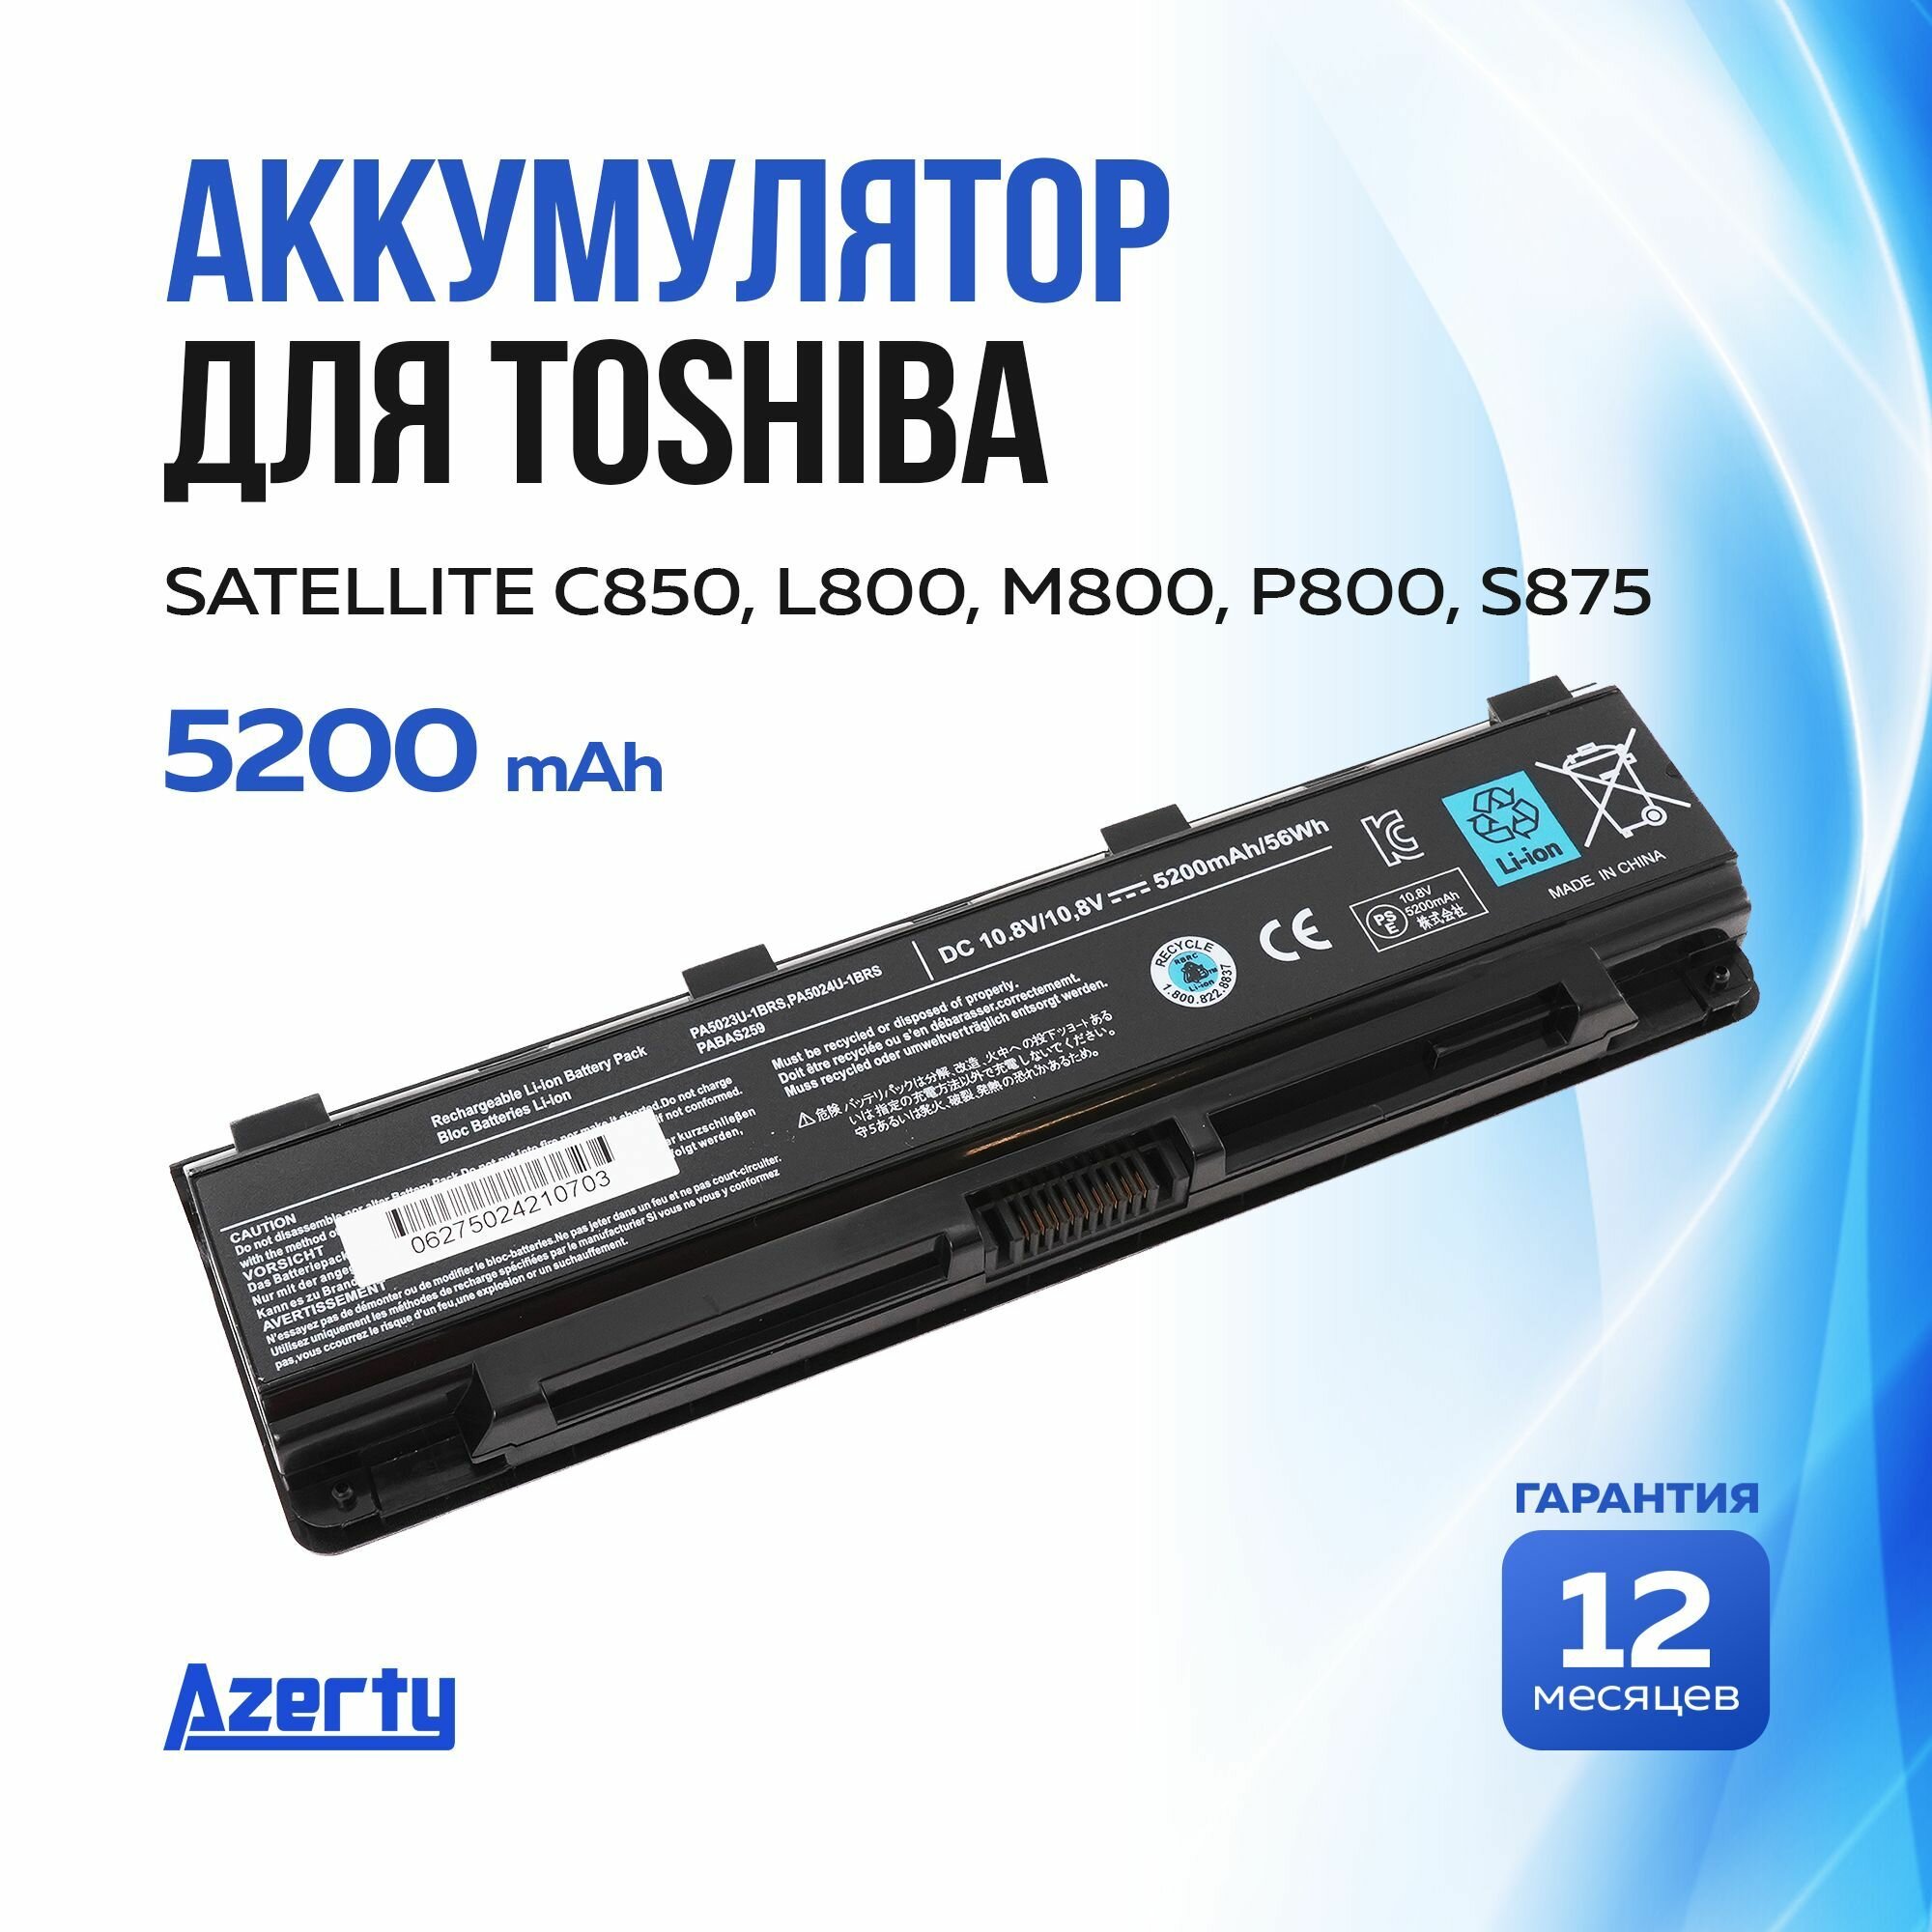 Аккумулятор PA5024U для Toshiba Satellite C850 / L800 / M800 / P800 / S875 (PABAS260 PABAS261)